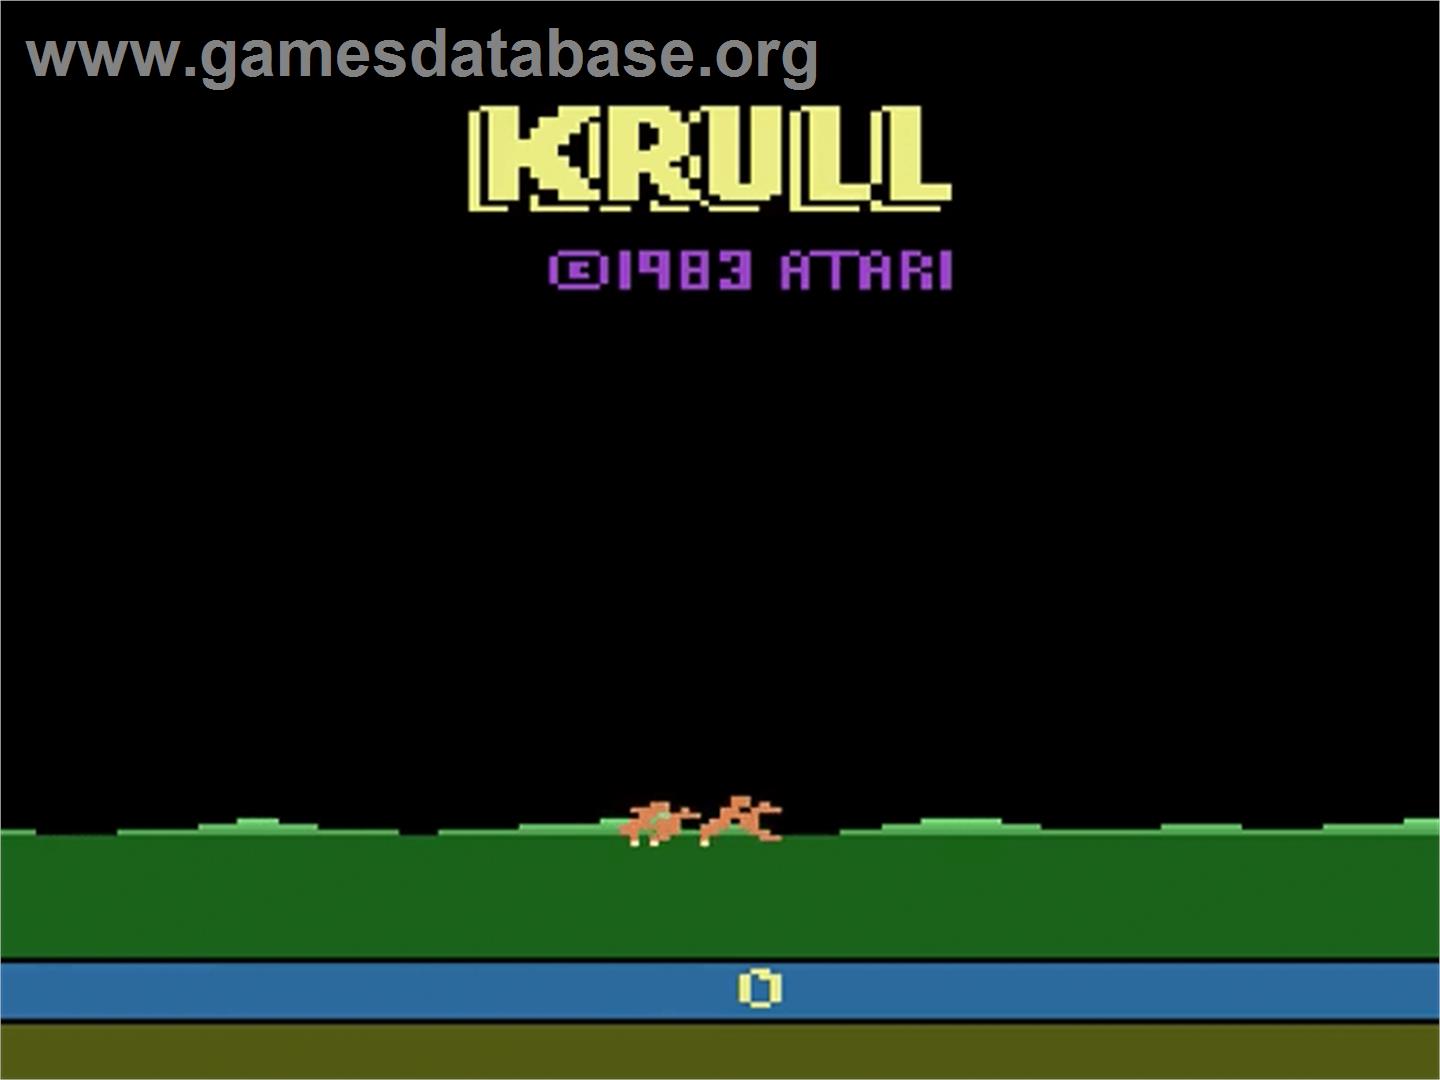 Krull - Atari 2600 - Artwork - Title Screen